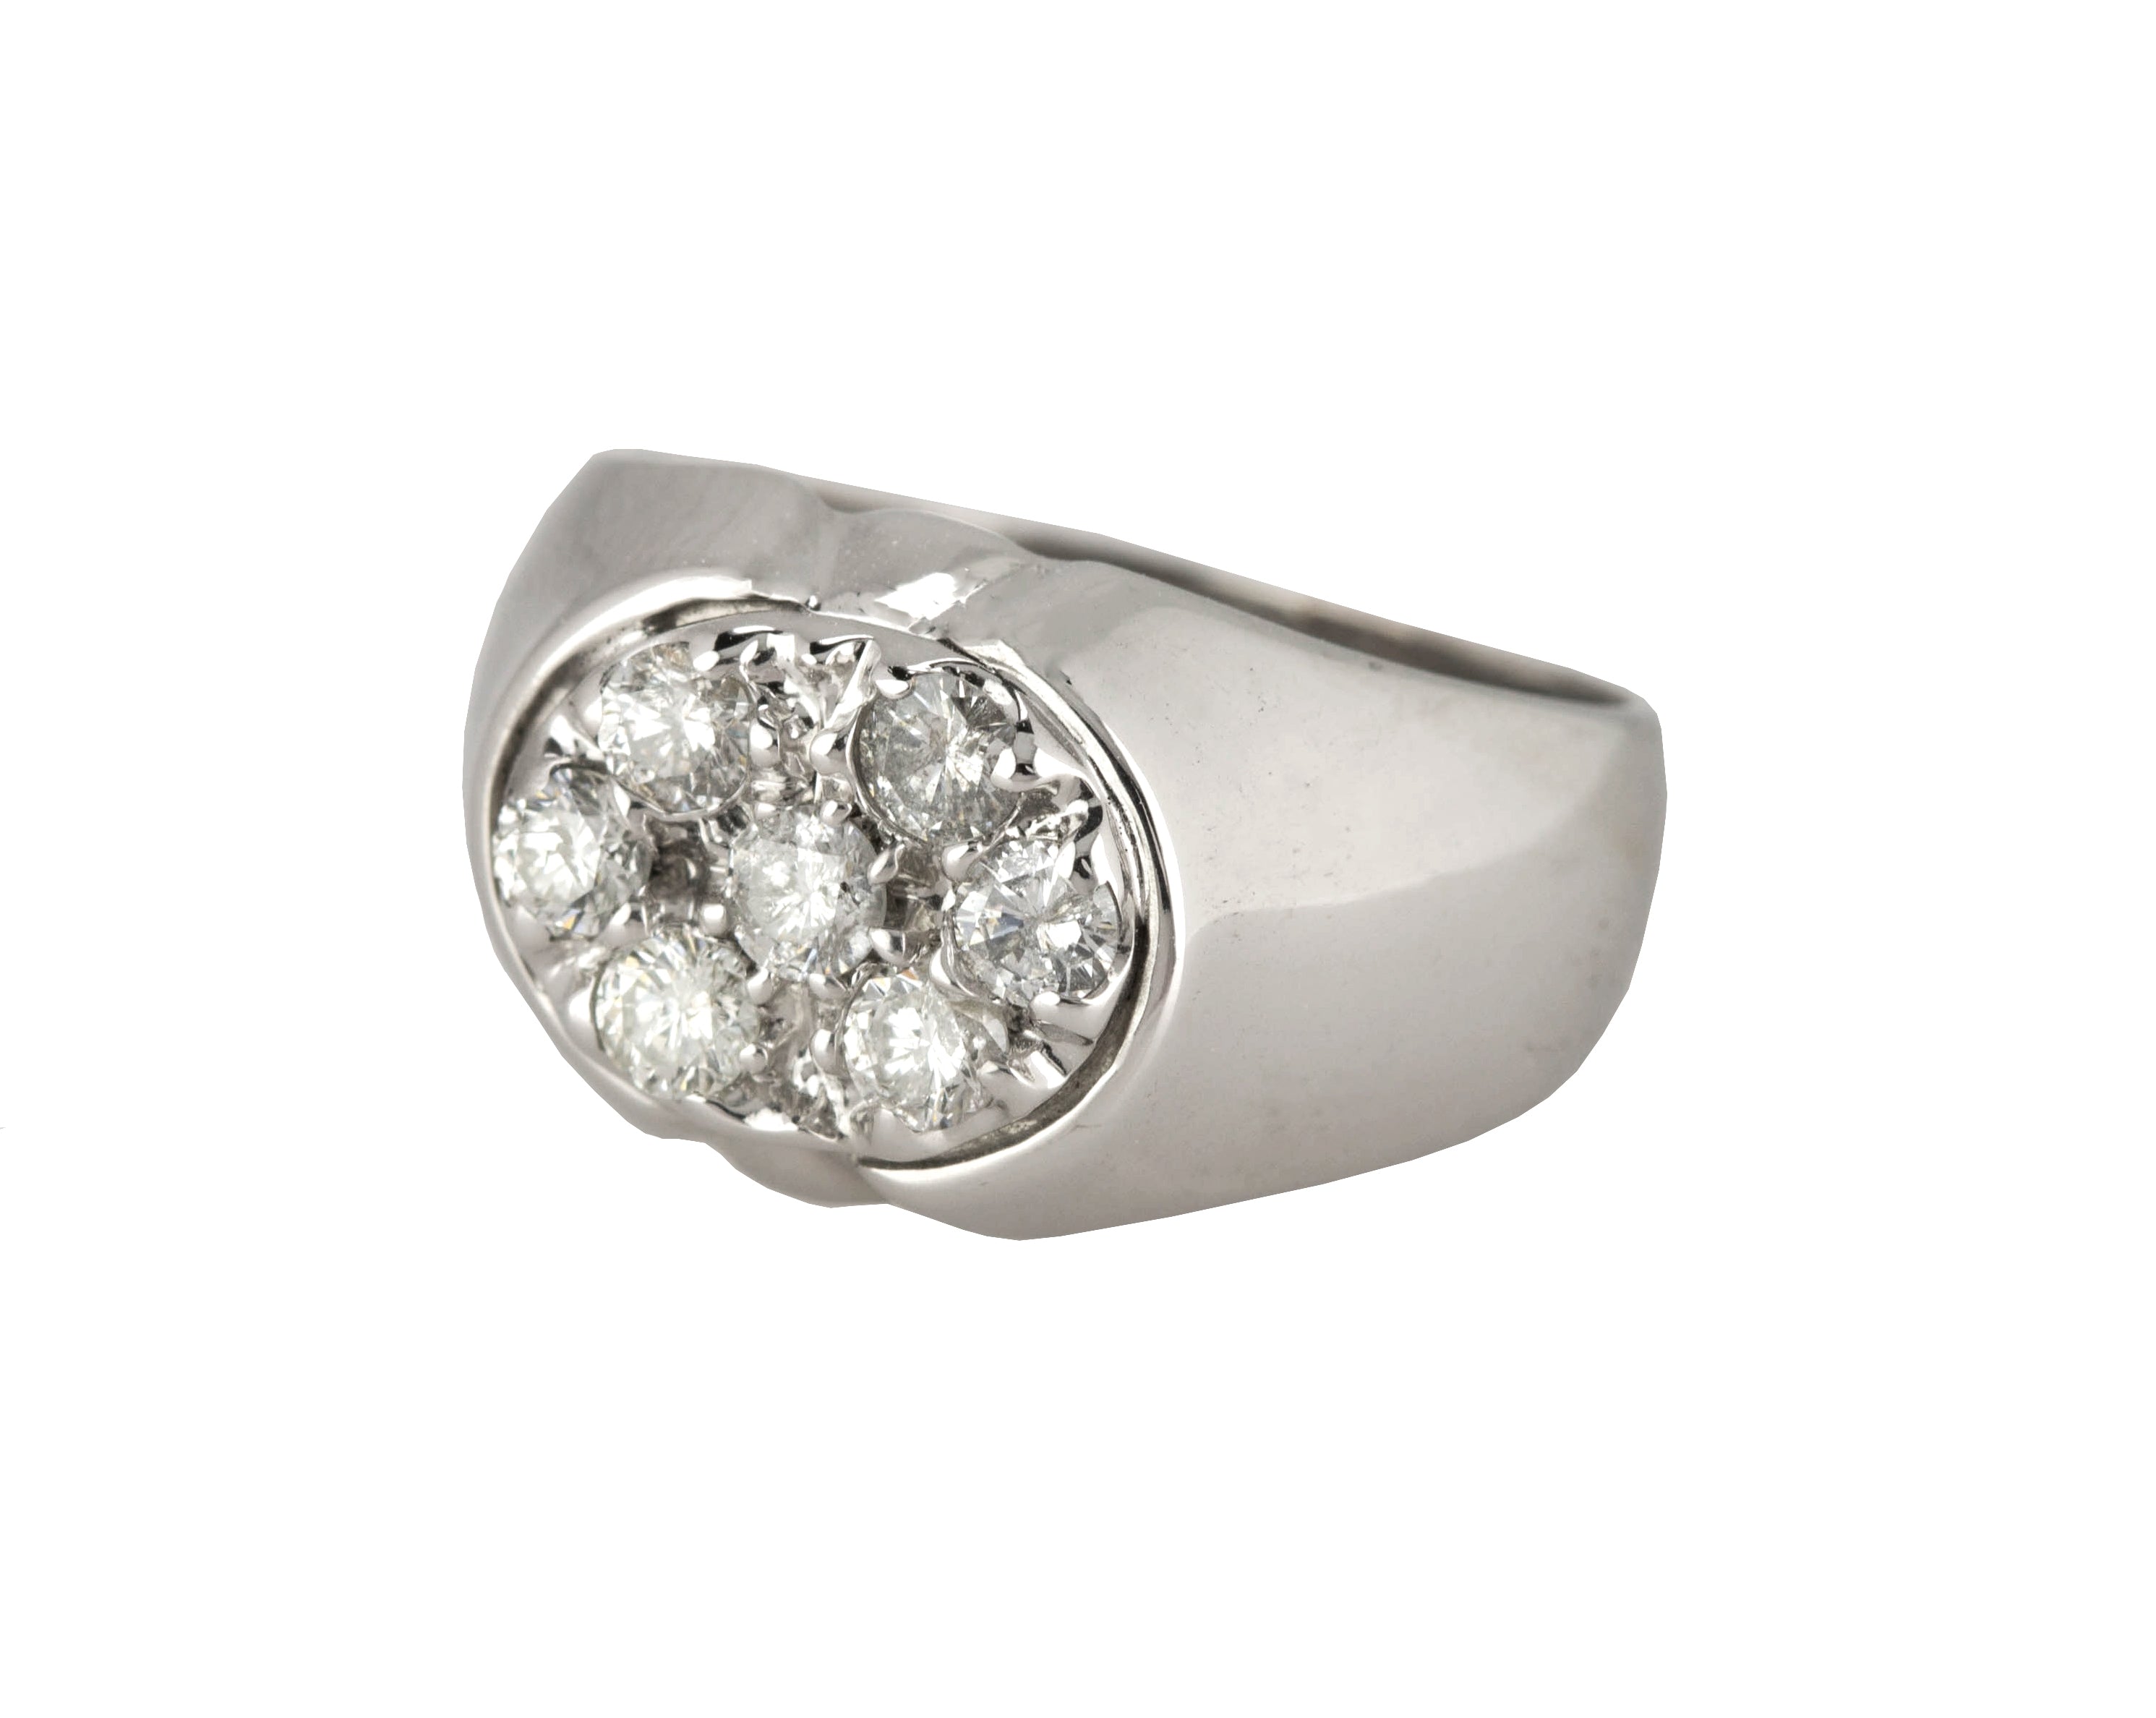 Men's Estate Solid 14K White Gold 0.63ctw Diamond Cluster Pinky Ring